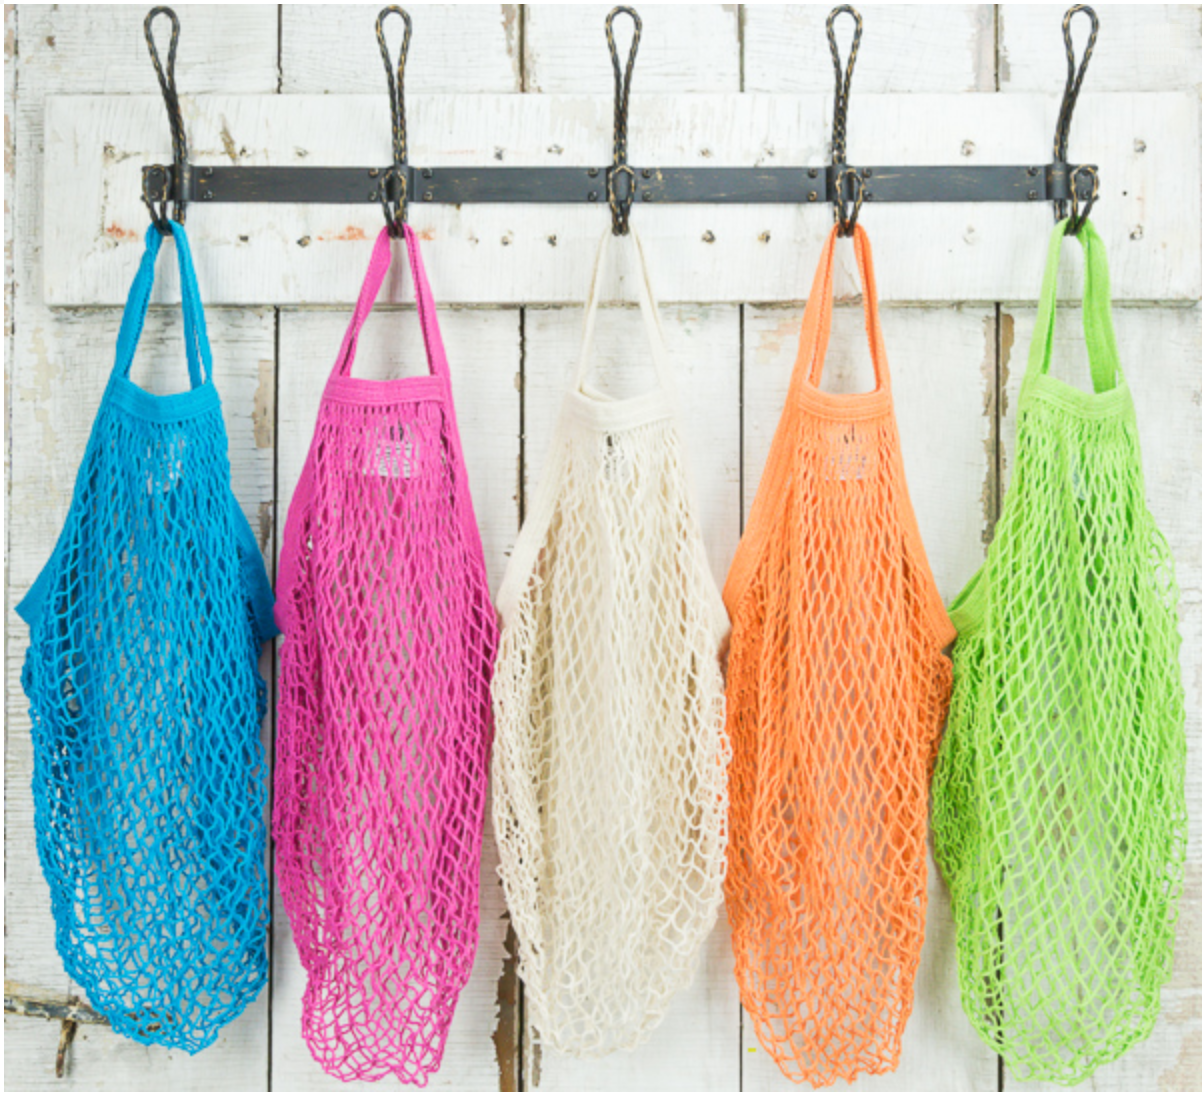 Eco Bags Tropical Market String Bag - Tote Handle